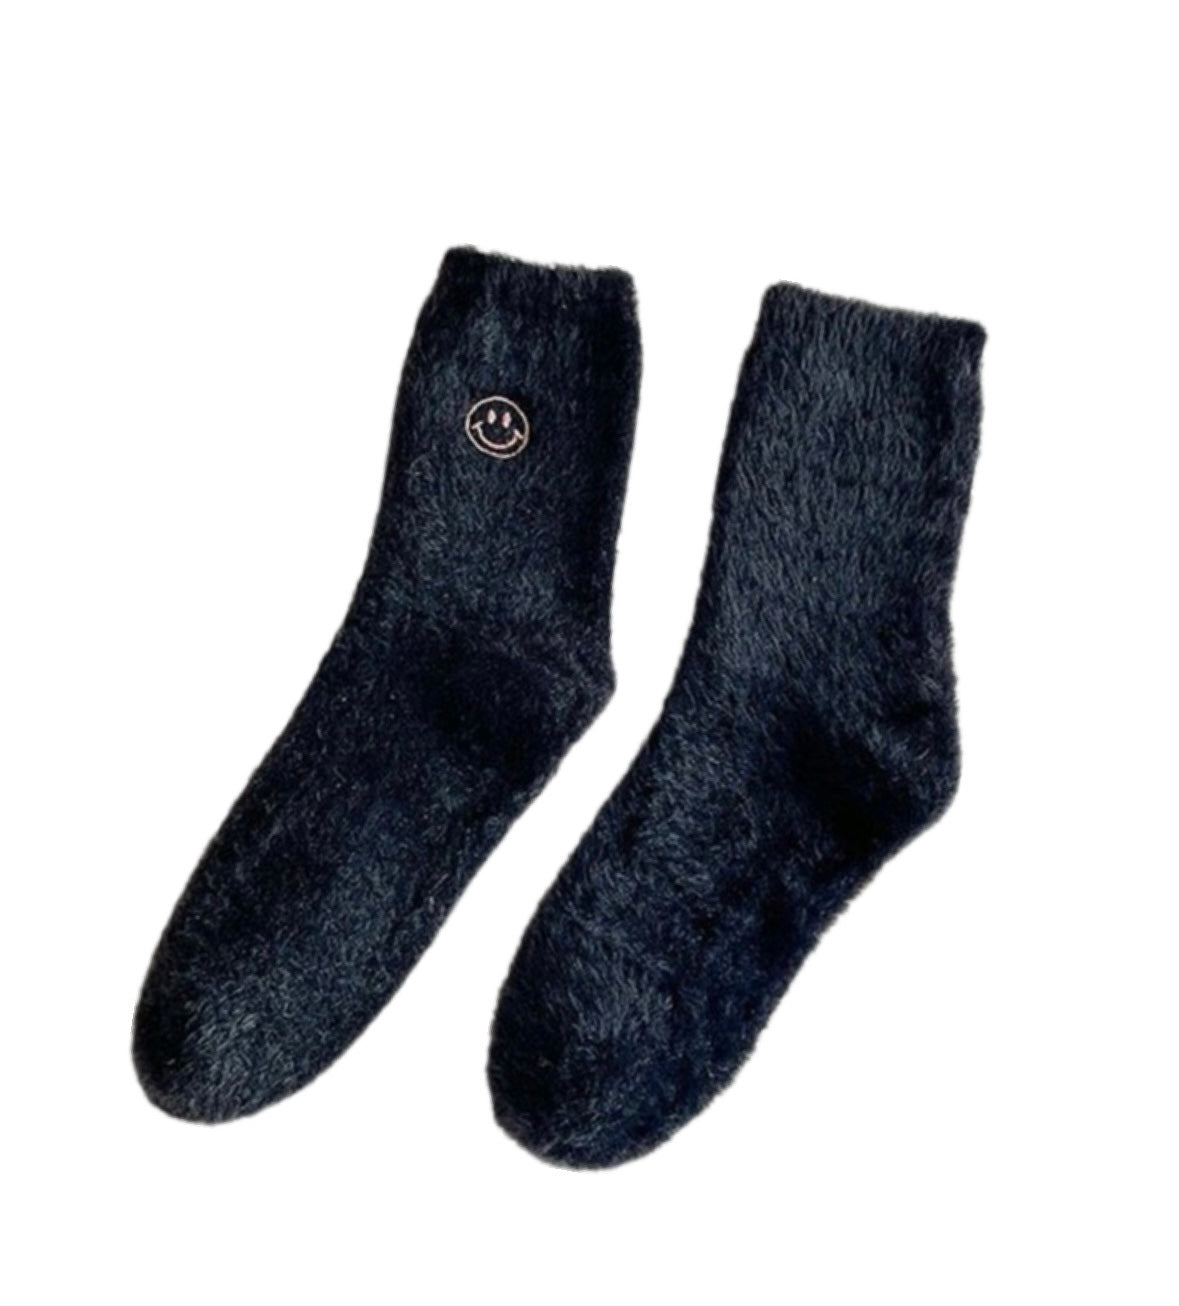 Small Smiley Fuzzy Socks - Black